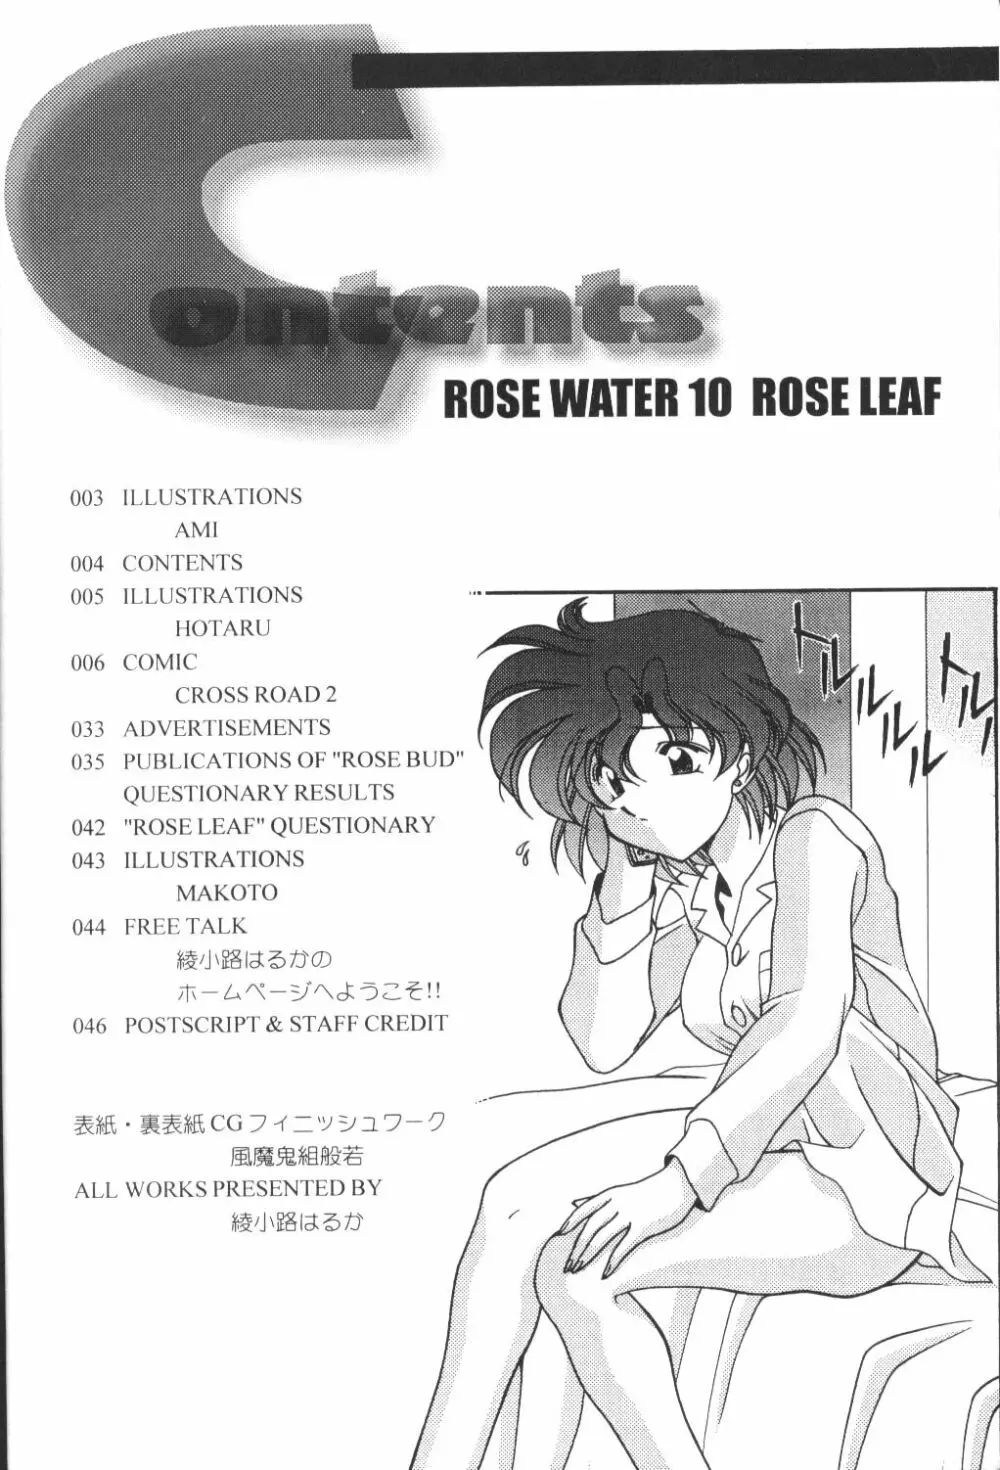 ROSE WATER 10 ROSE LEAF 4ページ